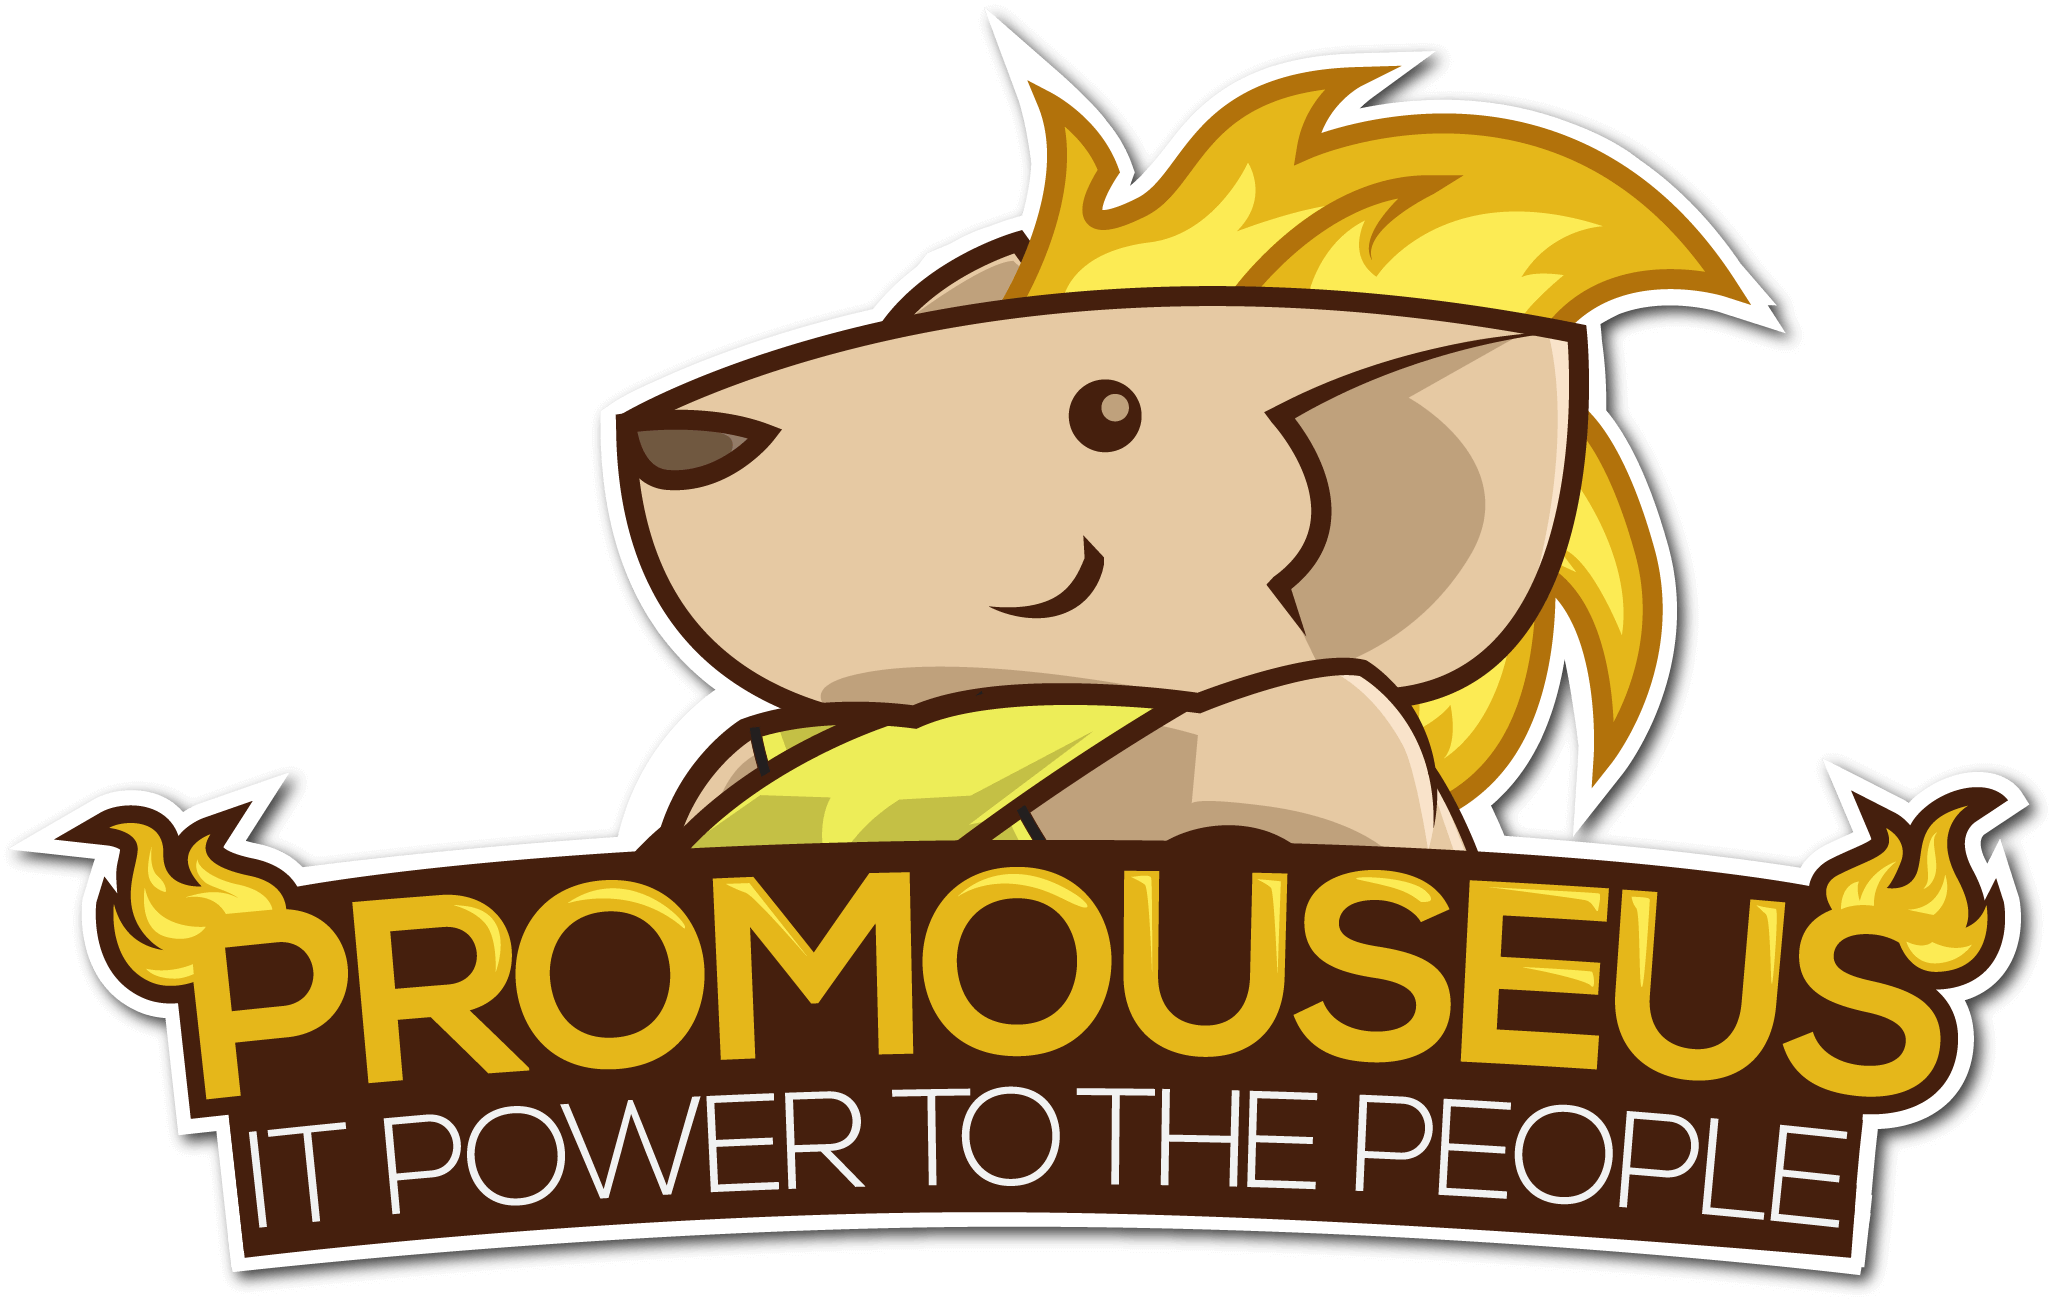 Promouseus logo